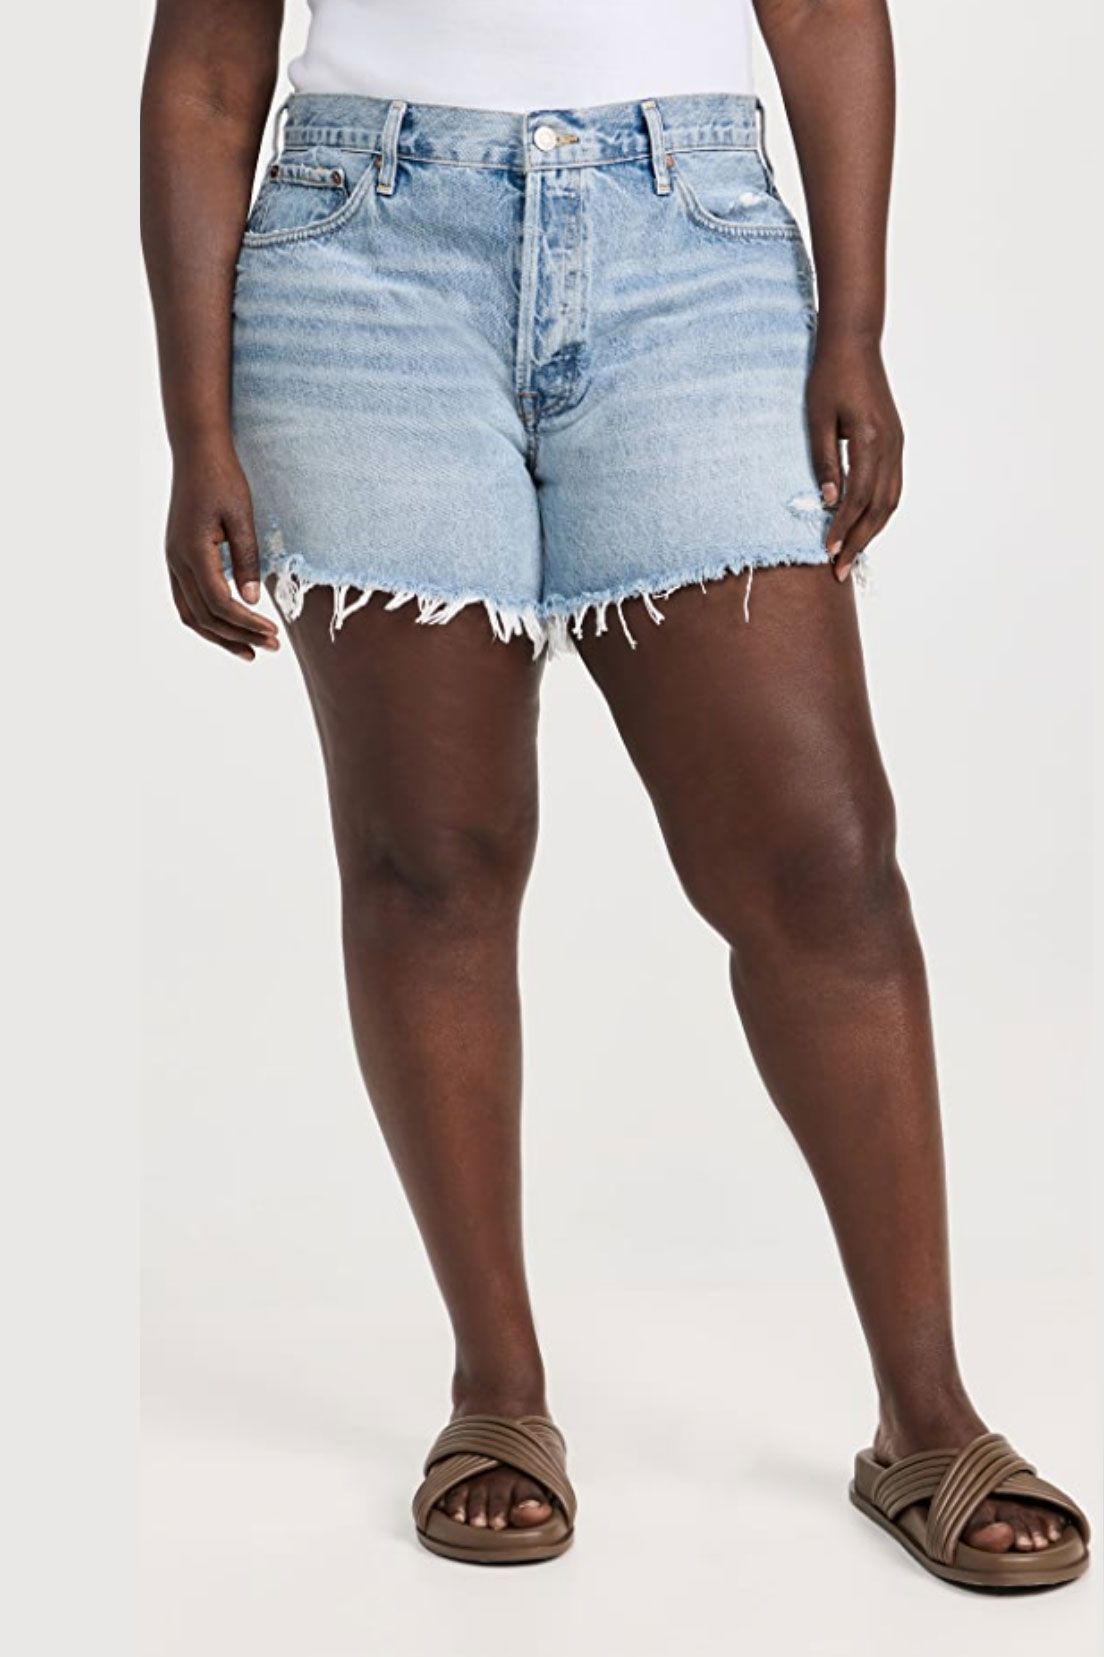 Shorts for Women